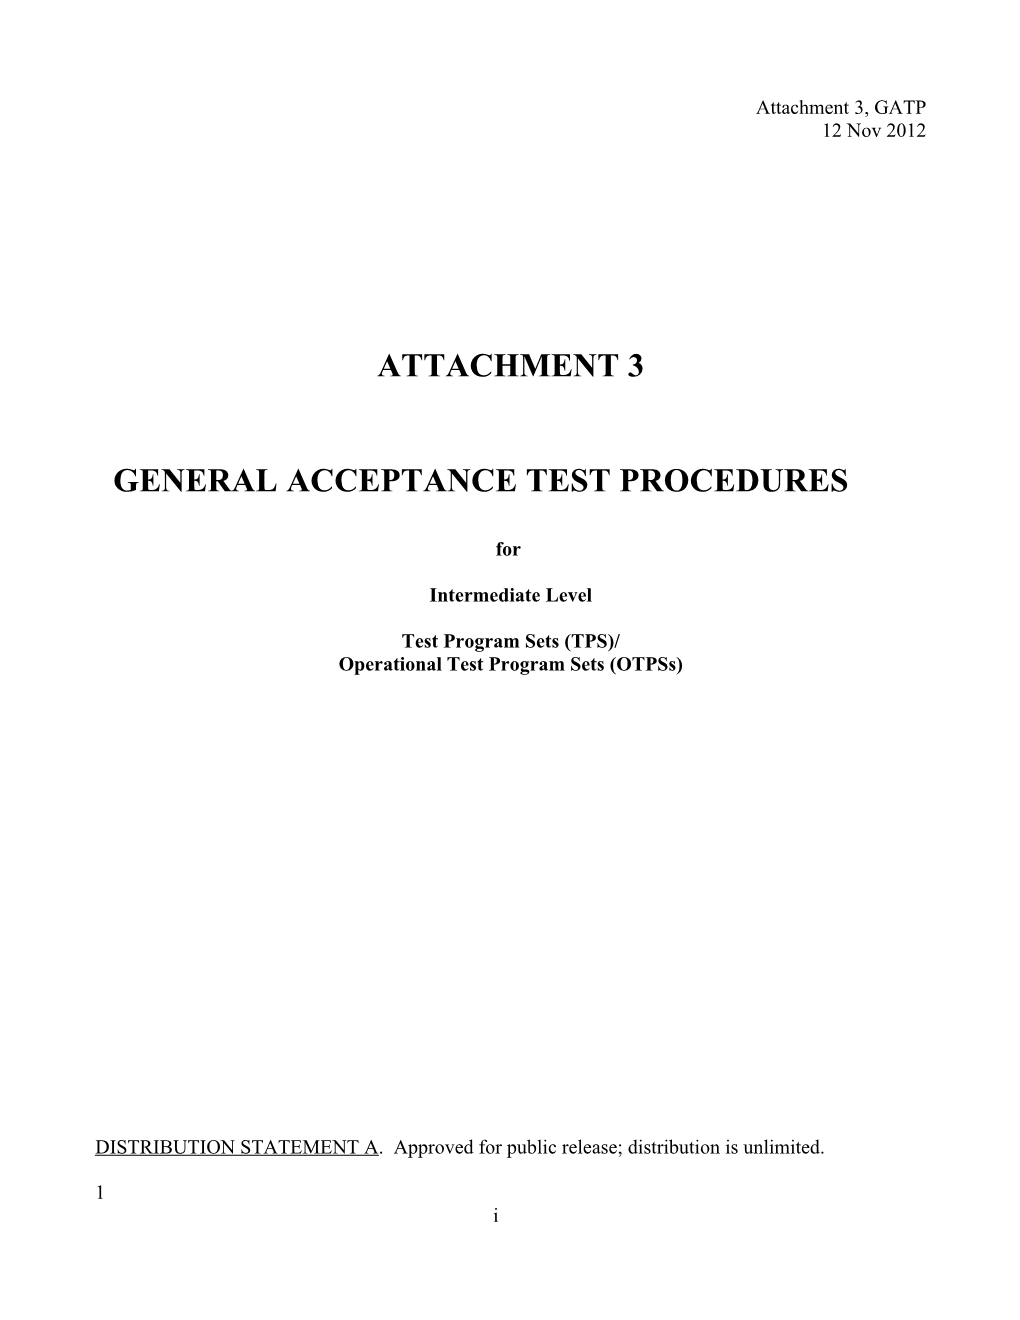 General Acceptance Test Procedures